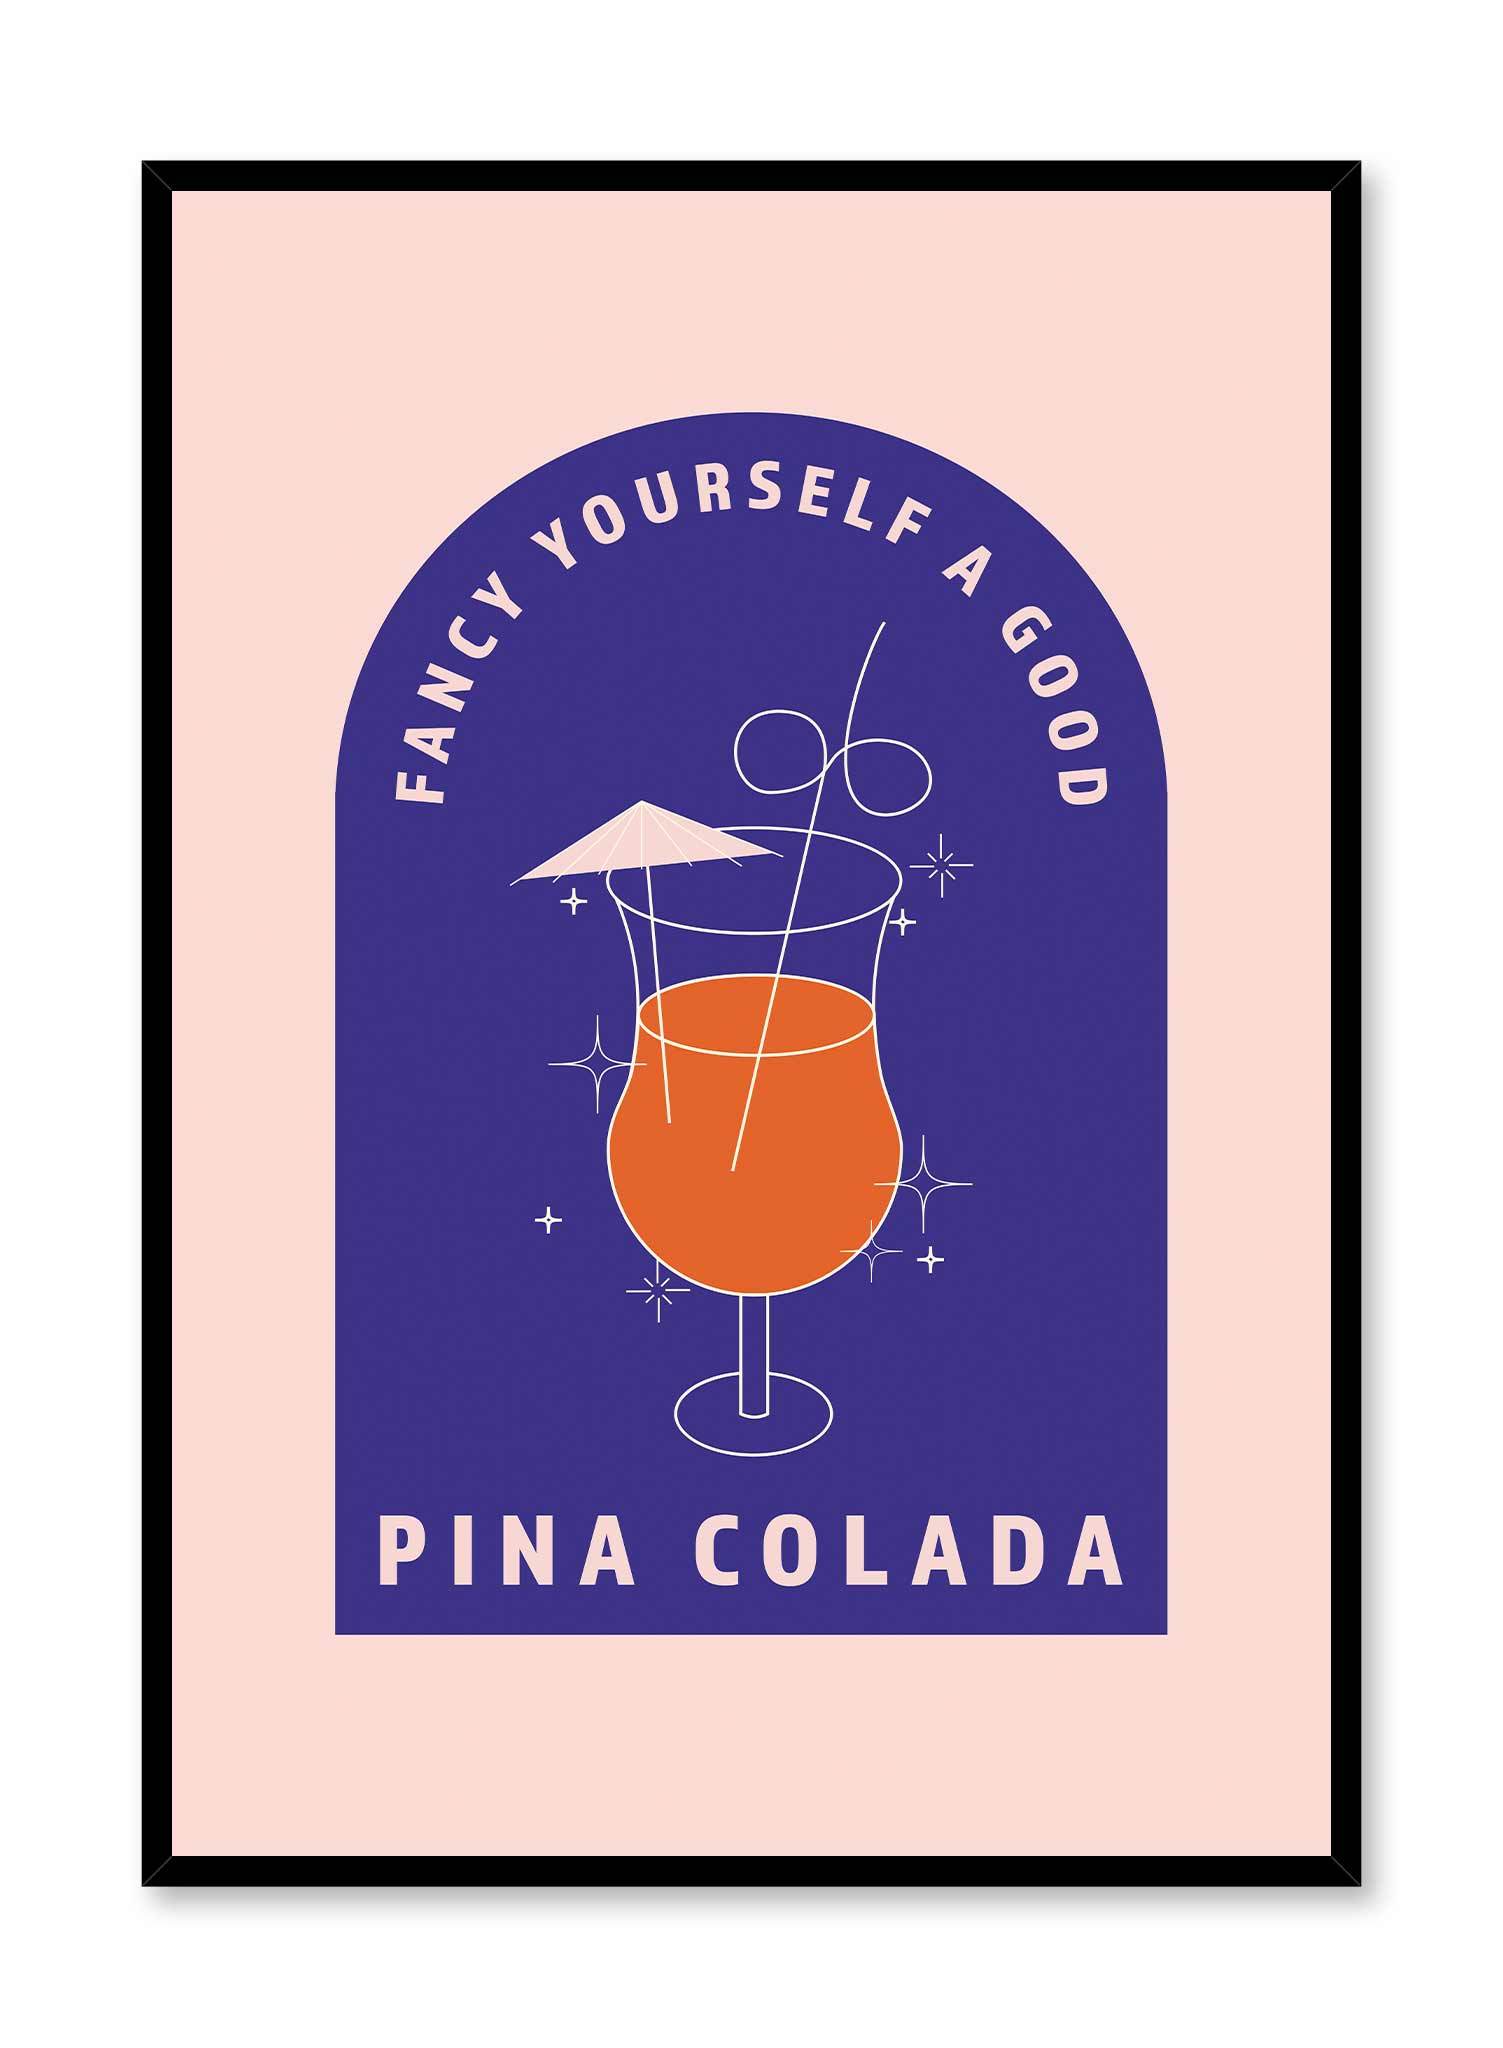 Piña Colada is a retro illustration poster of a orange piña colada cocktail by Opposite Wall.